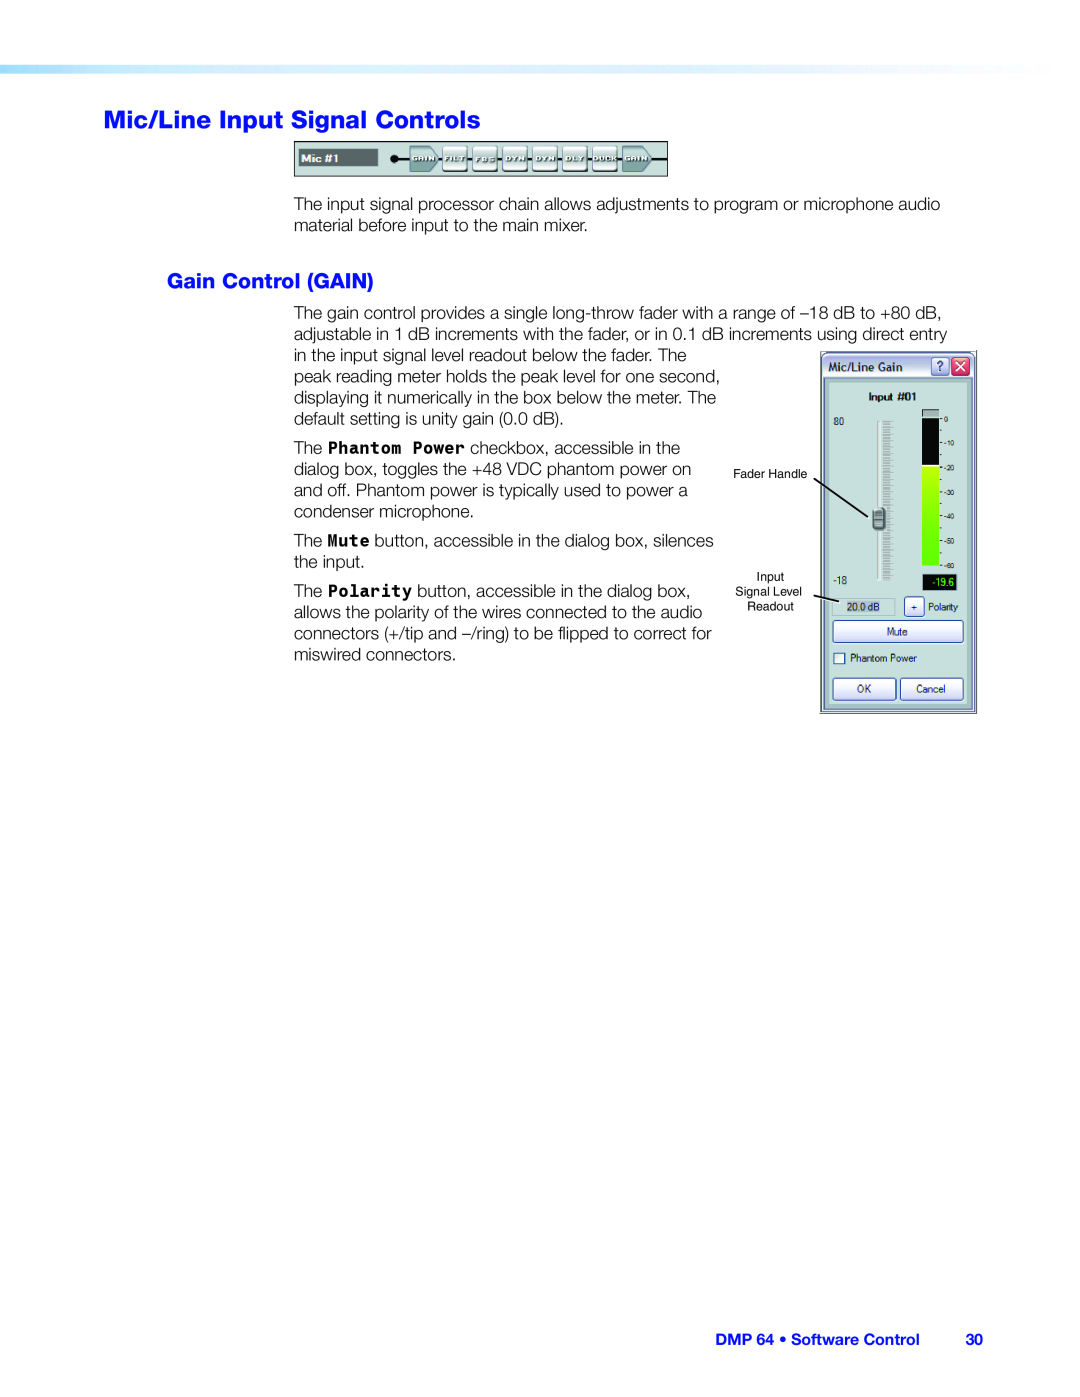 Extron electronic DMP 64 manual Mic/Line Input Signal Controls, Gain Control GAIN 